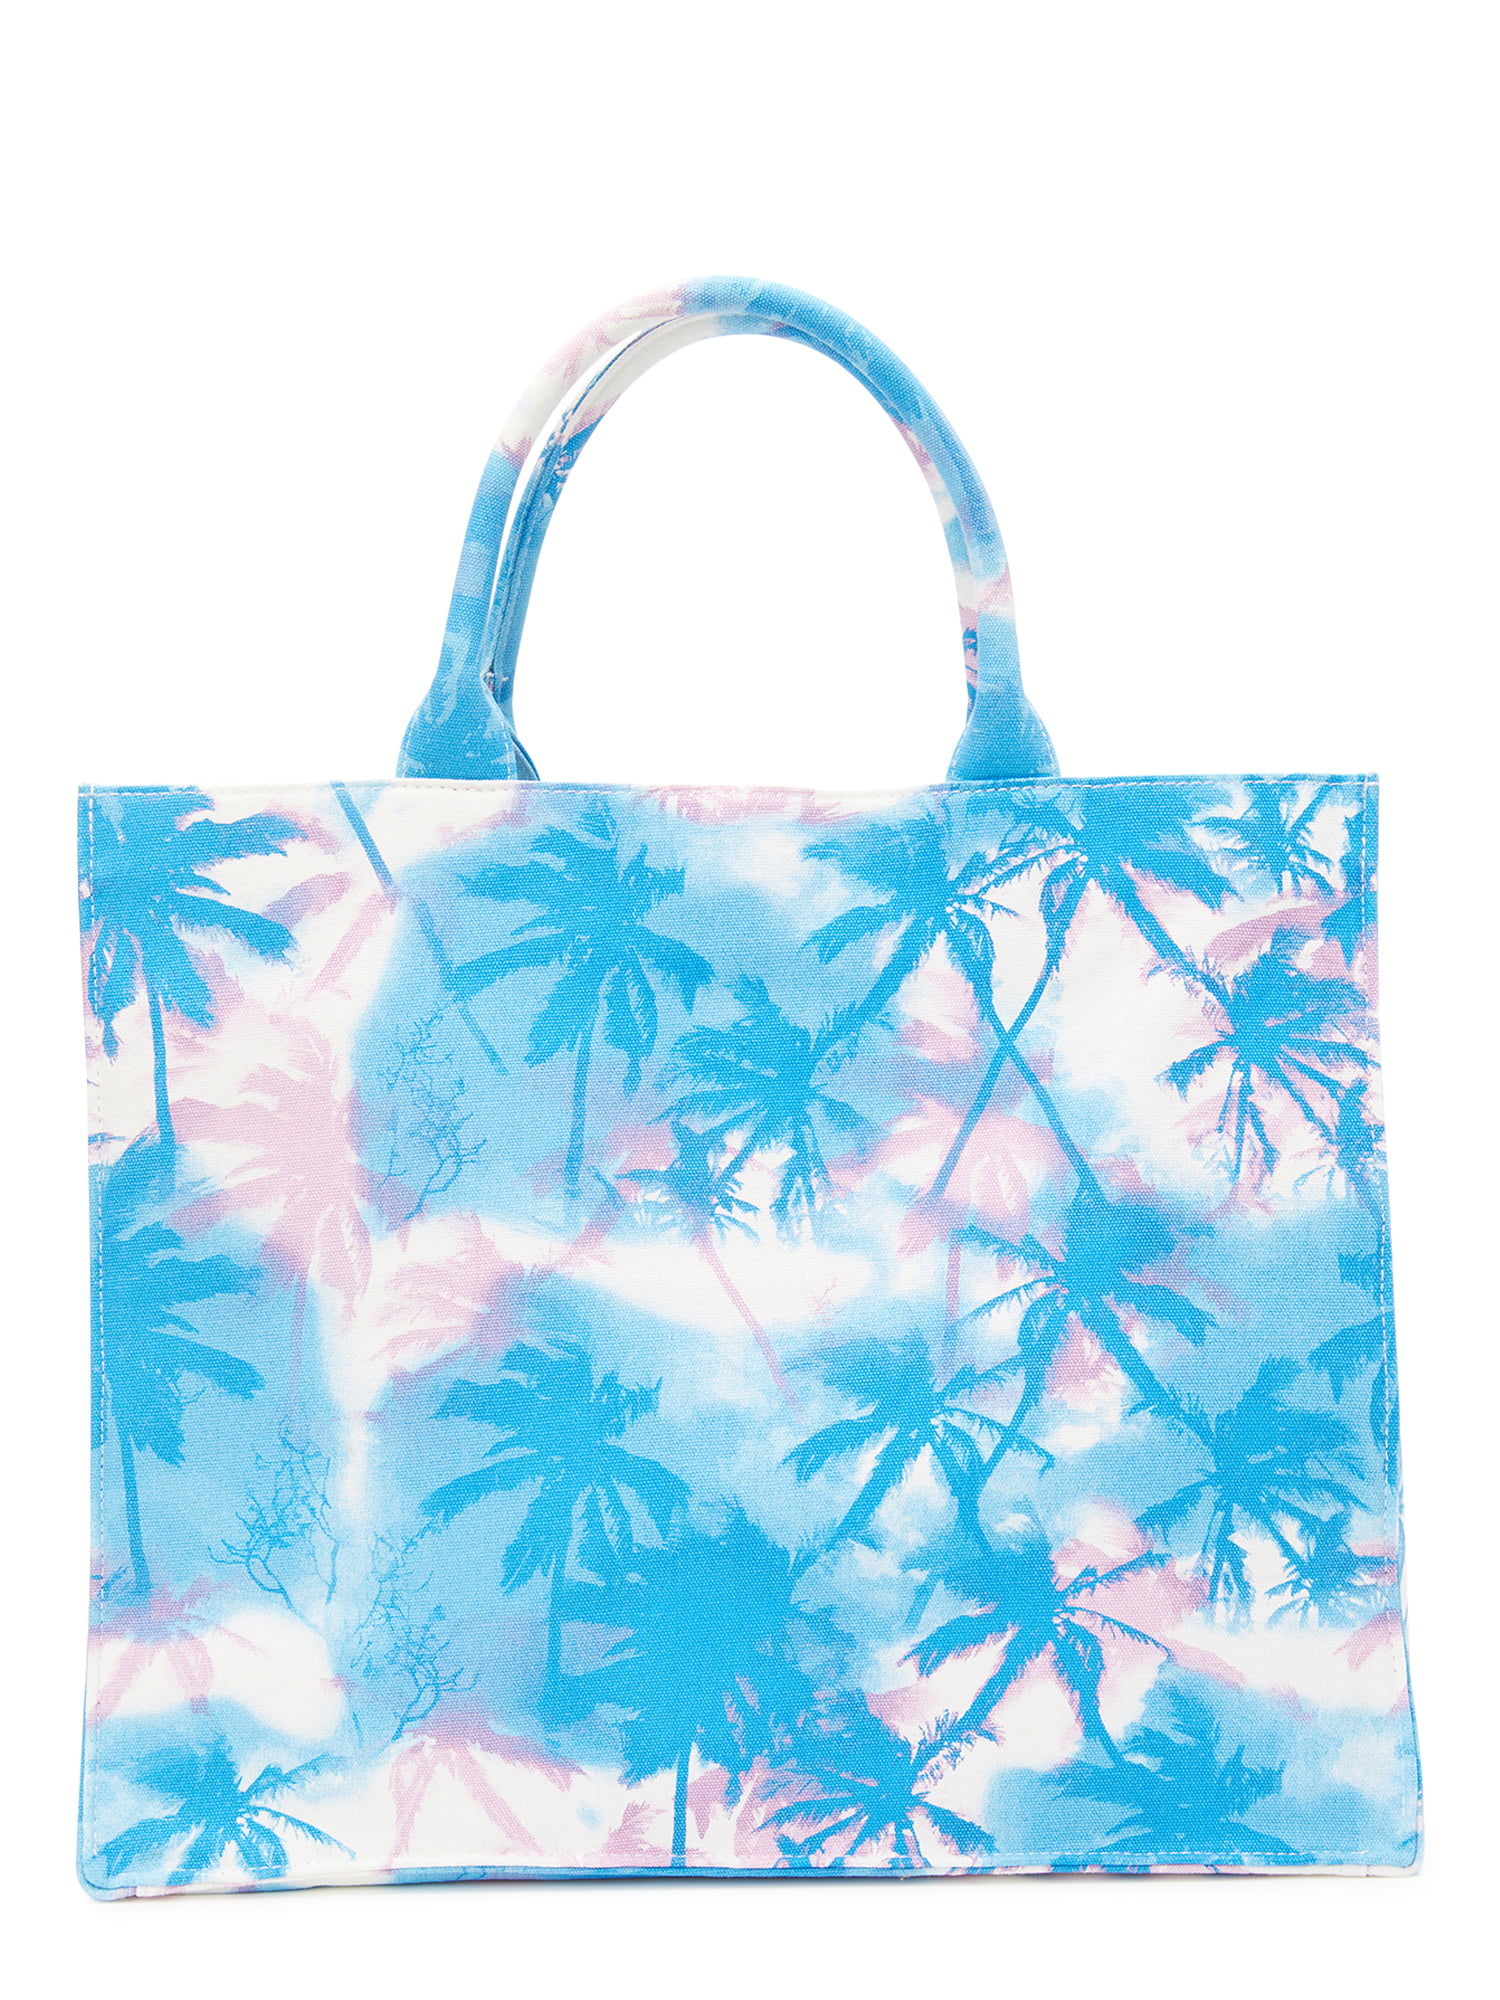 Nova Blue Neoprene Tote Bag - Blue Beach Bag Tote With Palm Leaf Design  Beach Tote Bag - Pool Bag Cute Beach Bag Travel Bag Beach Essentials